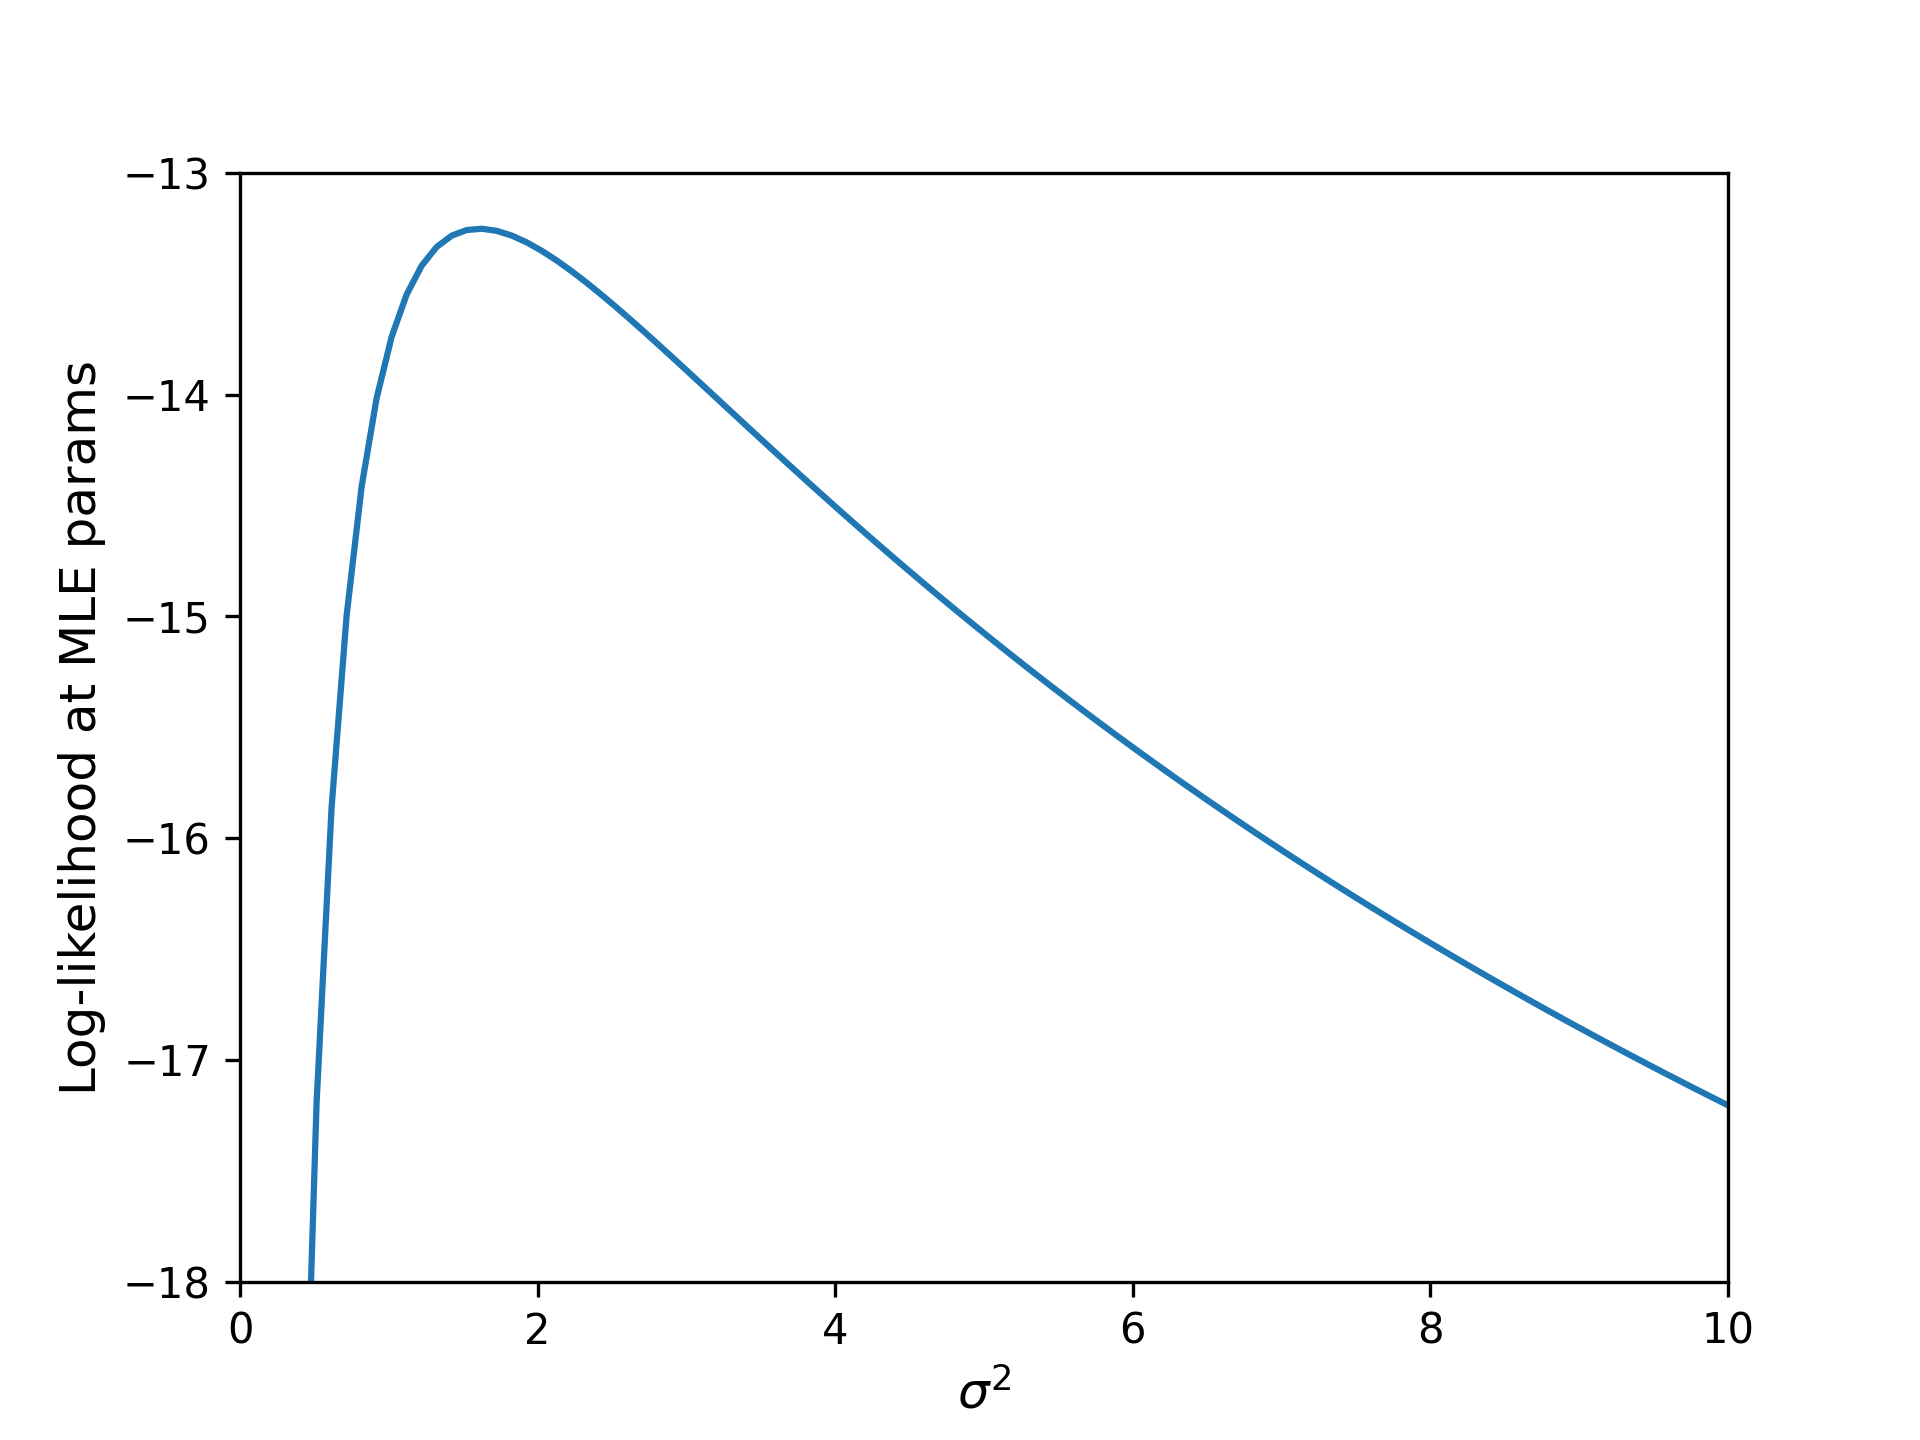 Log-likelihood as a function of $\sigma^2$